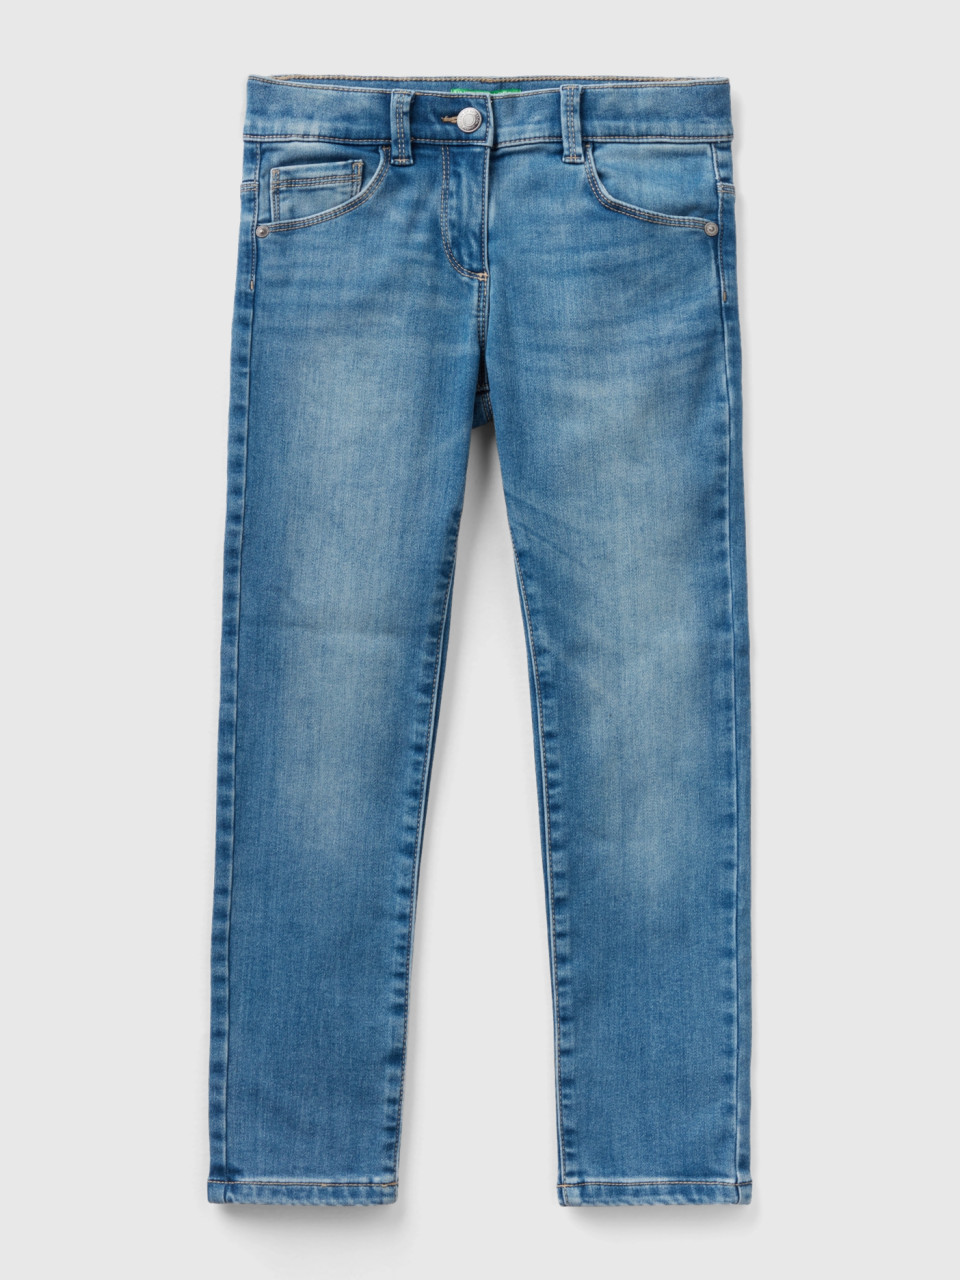 Benetton, Thermo-jeans Slim Fit, Azurblau, female